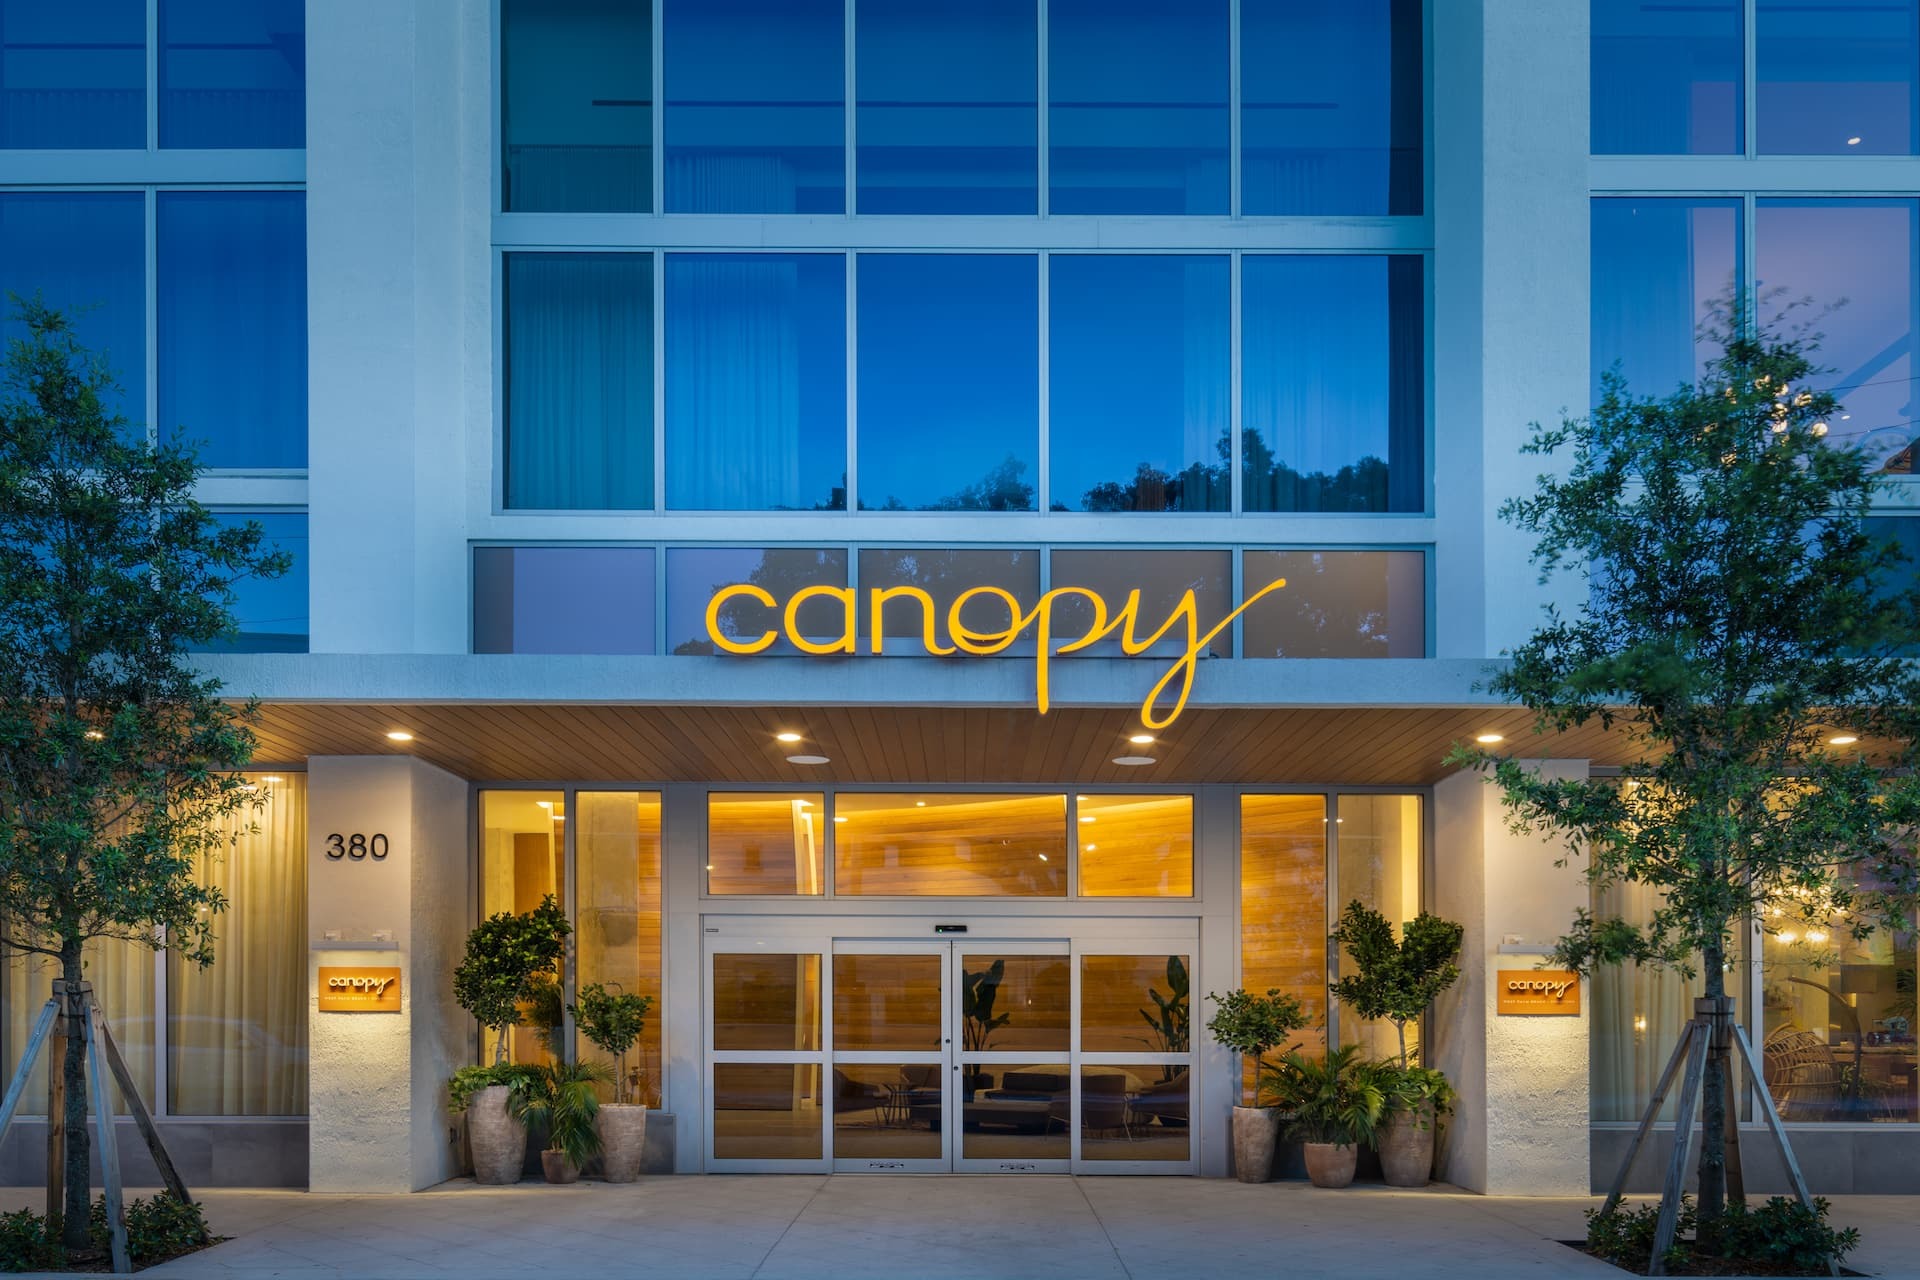 Photo of Canopy by Hilton West Palm Beach Downtown, West Palm Beach, FL